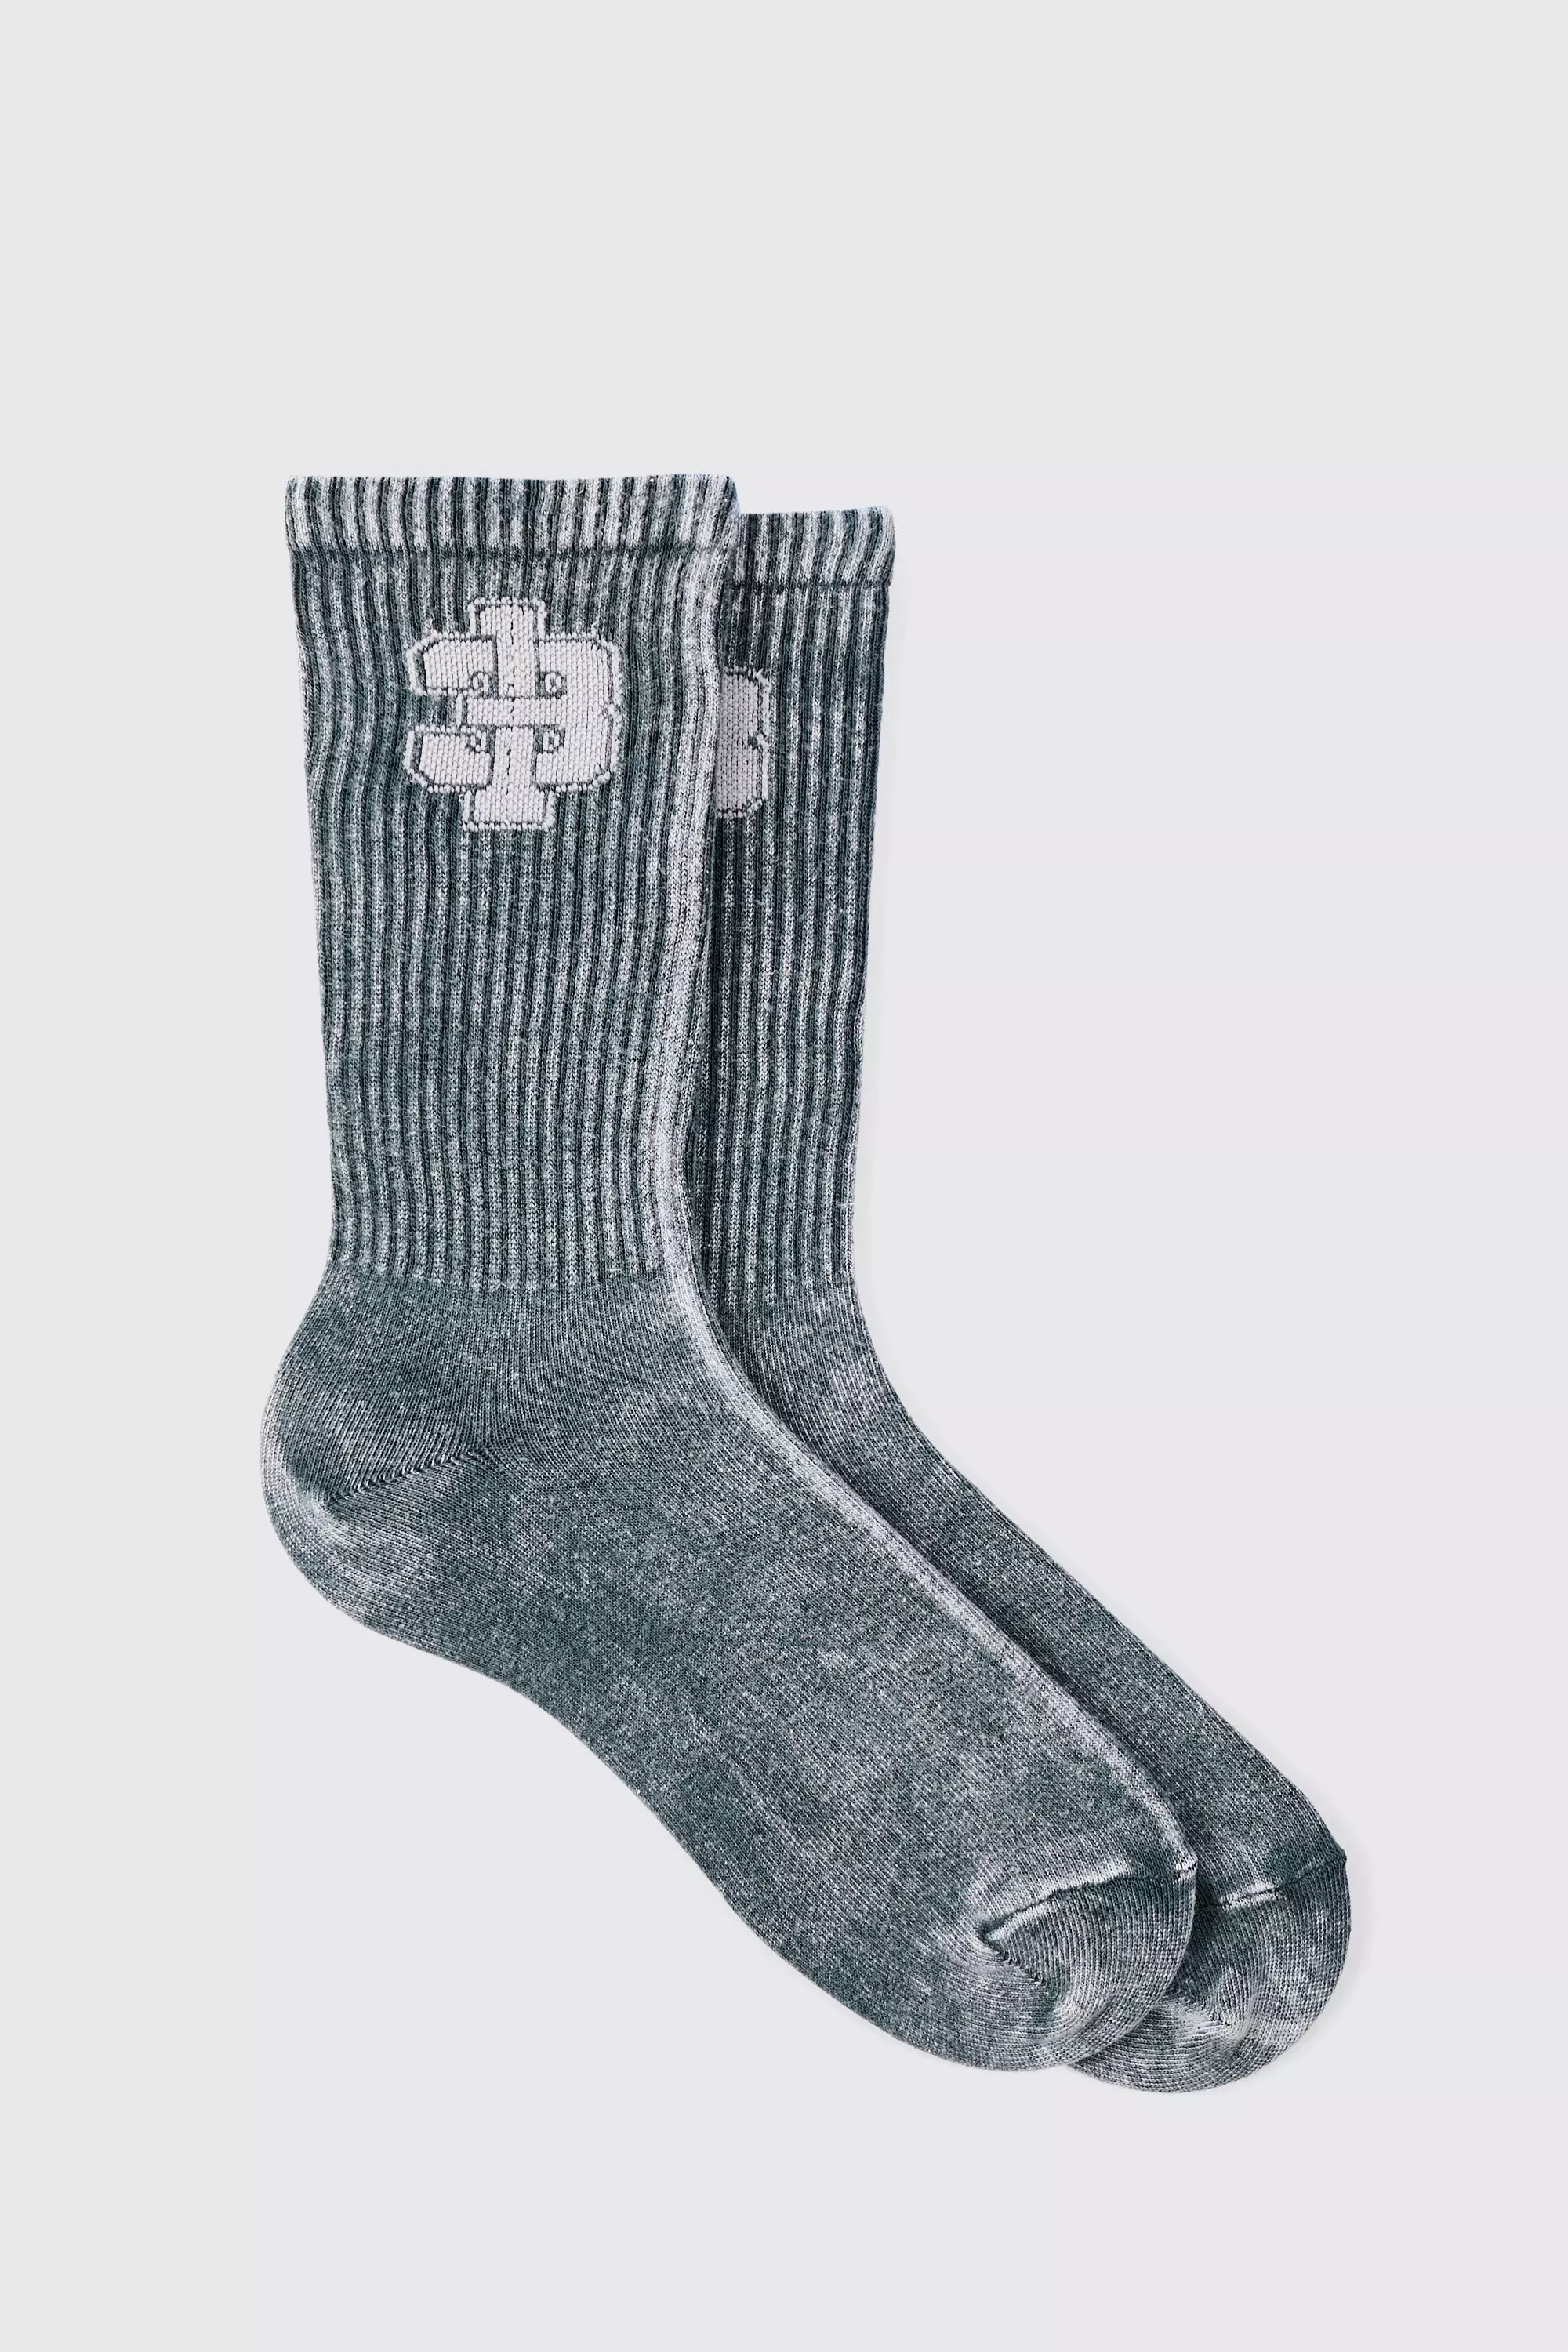 Acid Wash 13 Jacquard Socks In Charcoal Charcoal